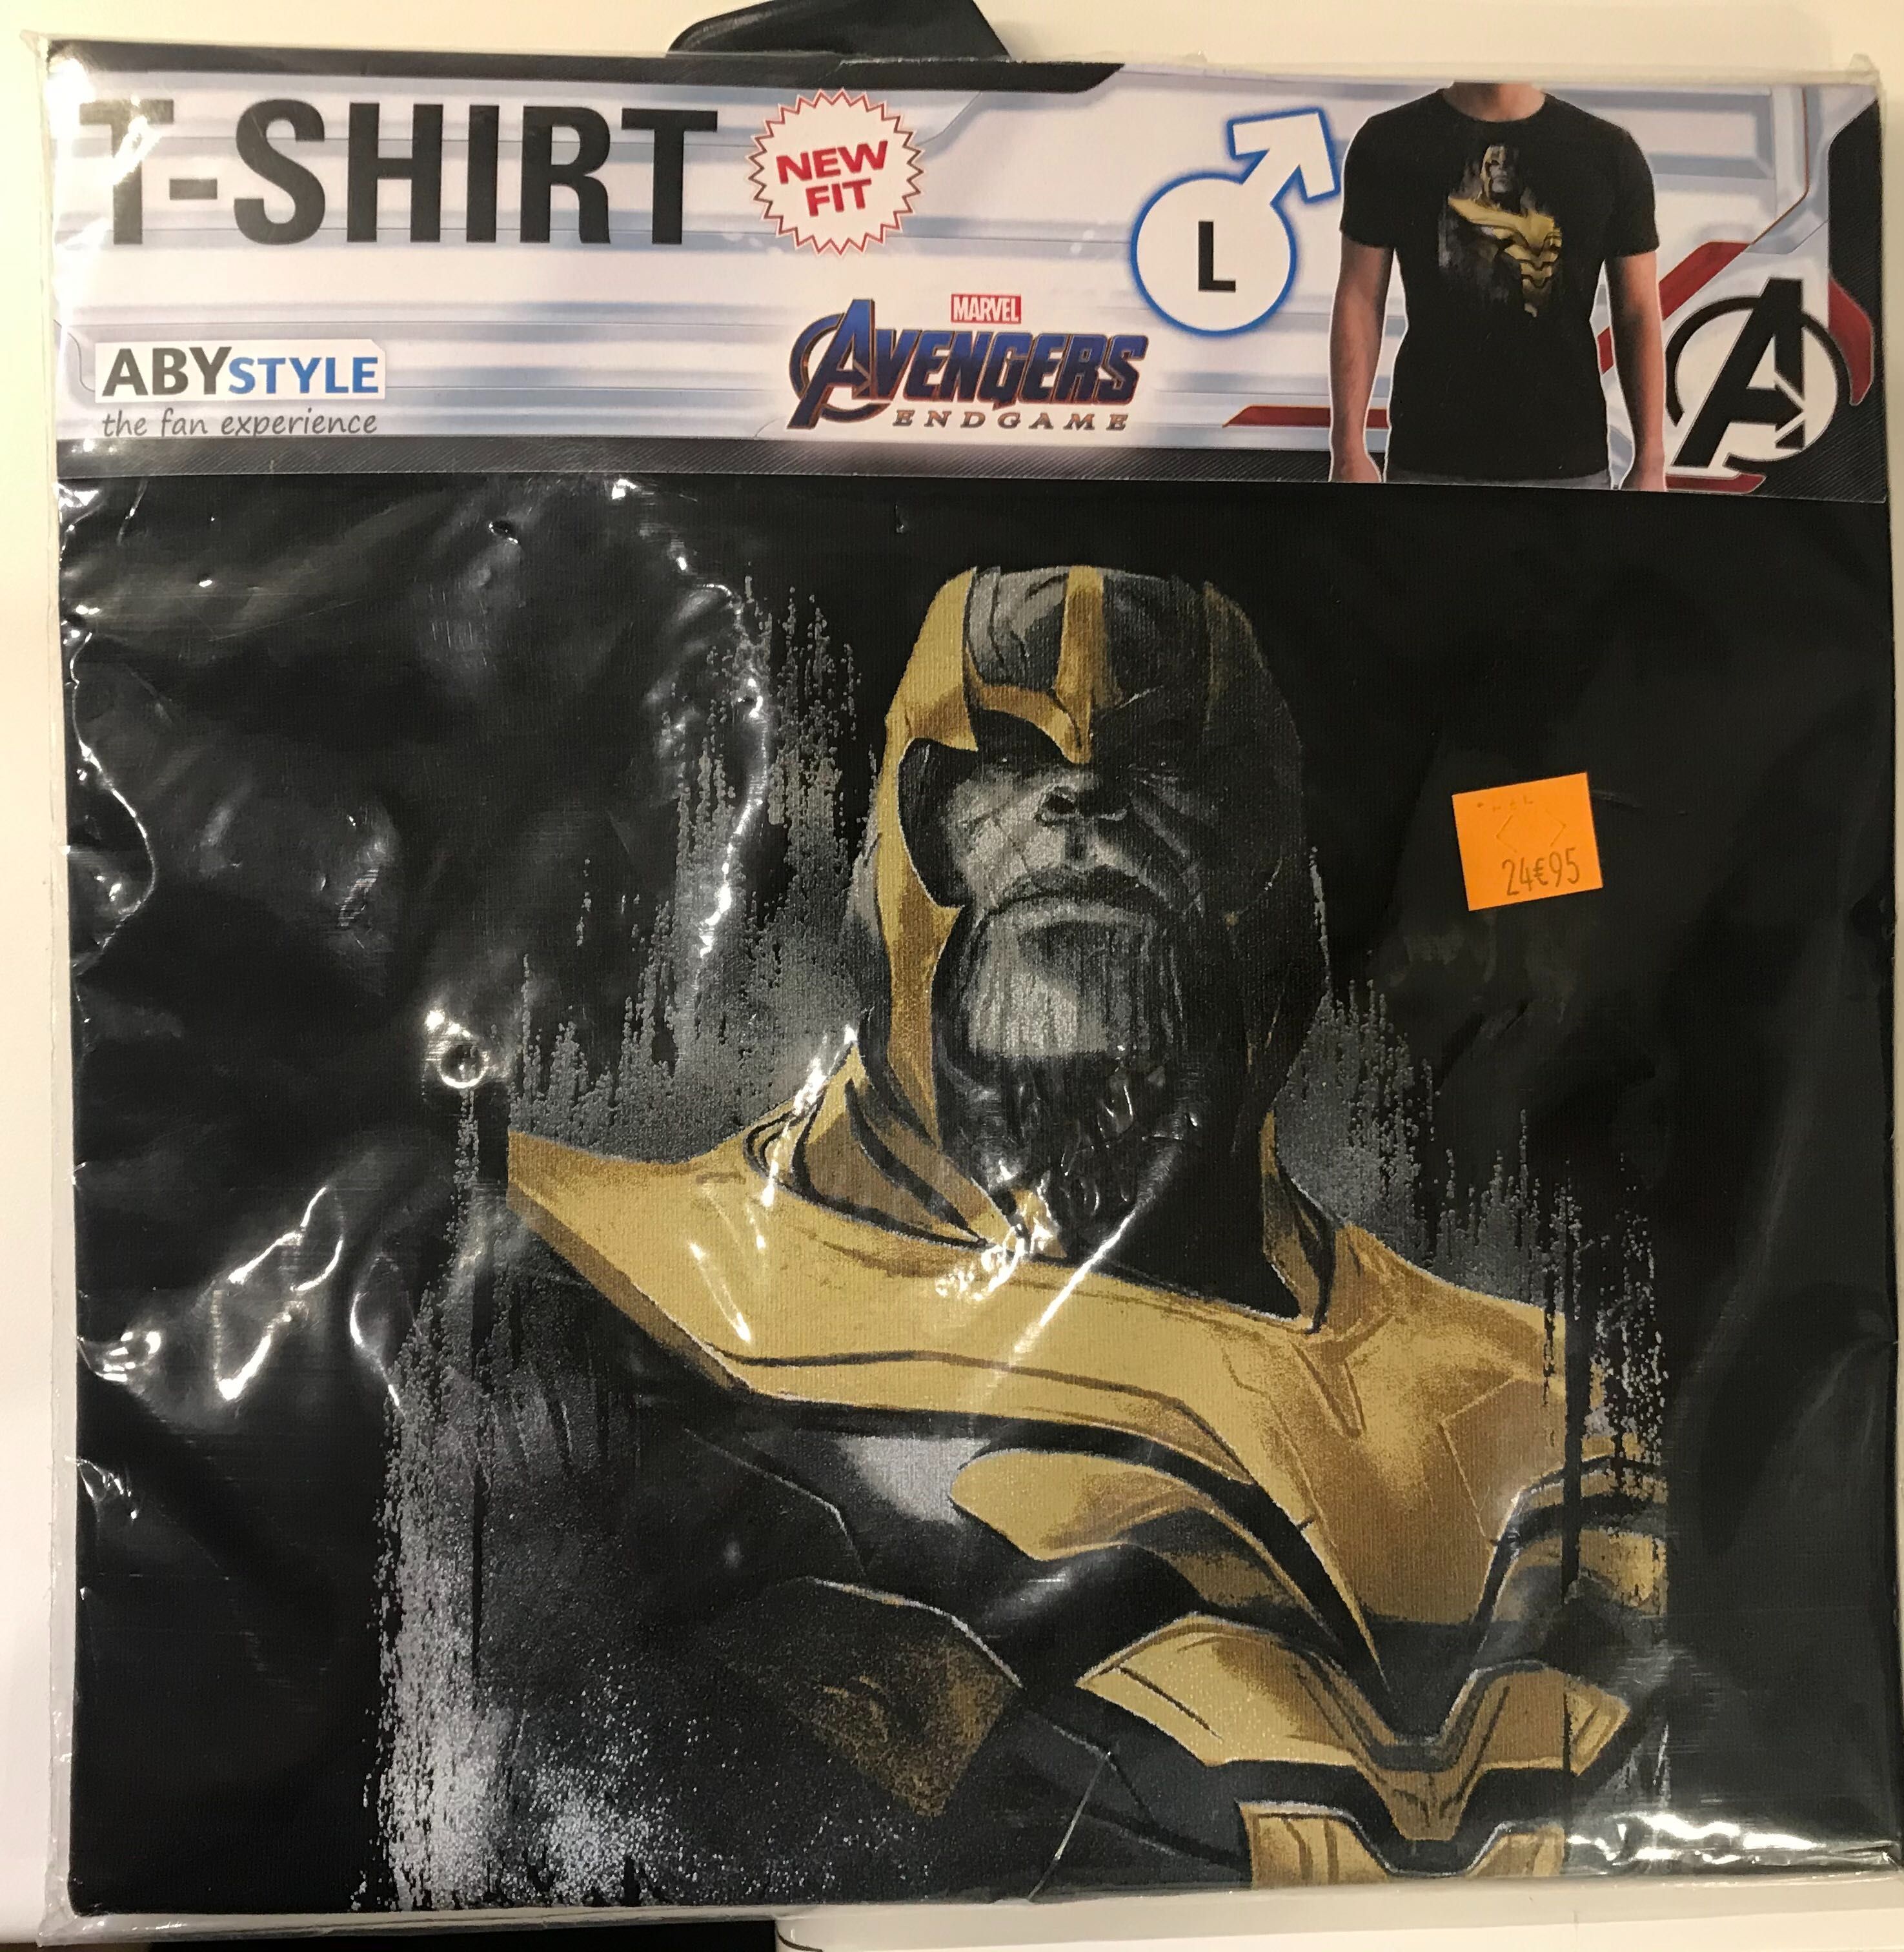 Koszulka - T-SHIRT - Avengers - Thanos  MARVEL rozmiar - L  Nowa